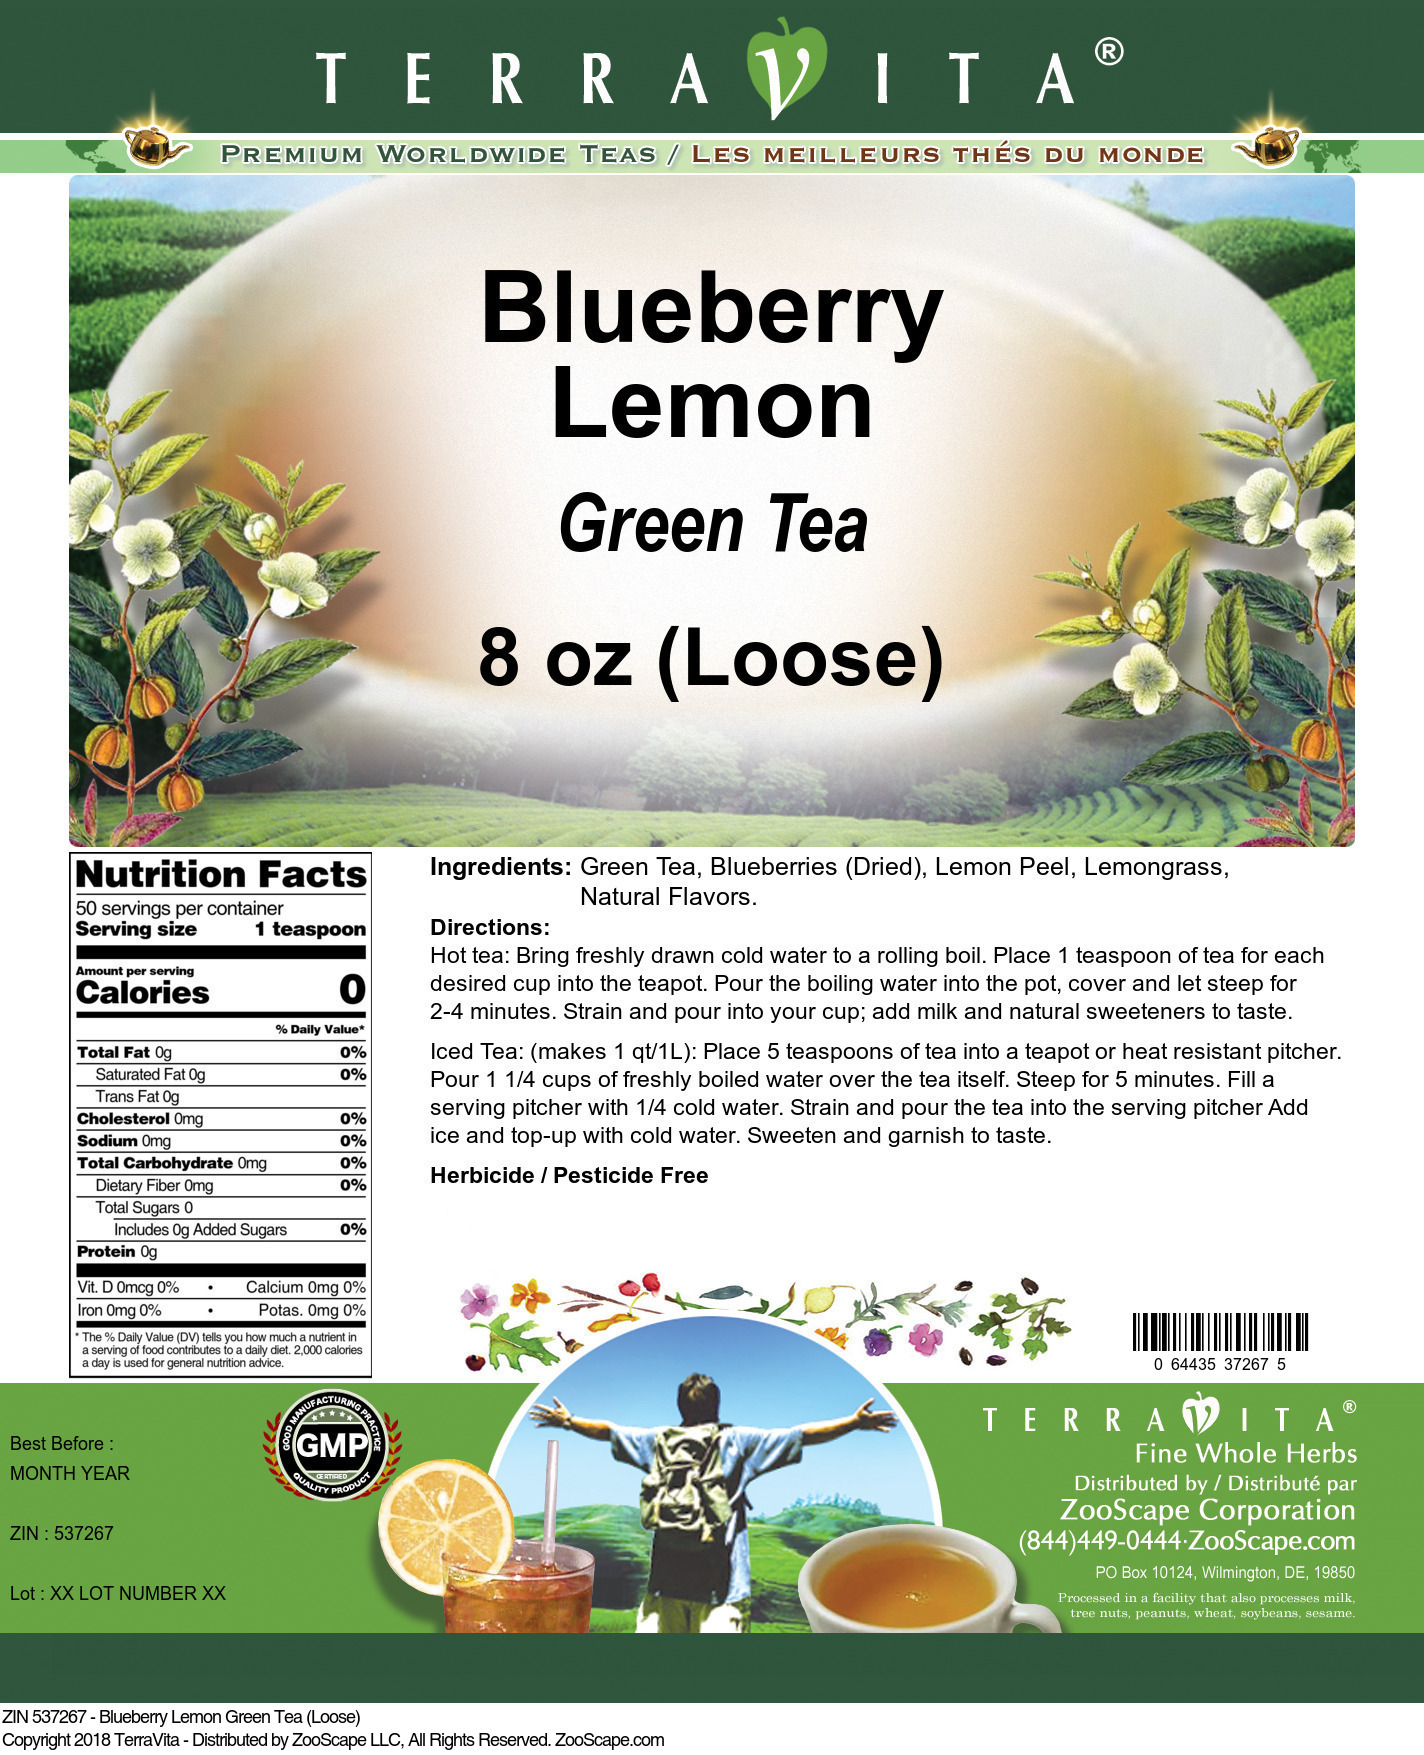 Blueberry Lemon Green Tea (Loose) - Label